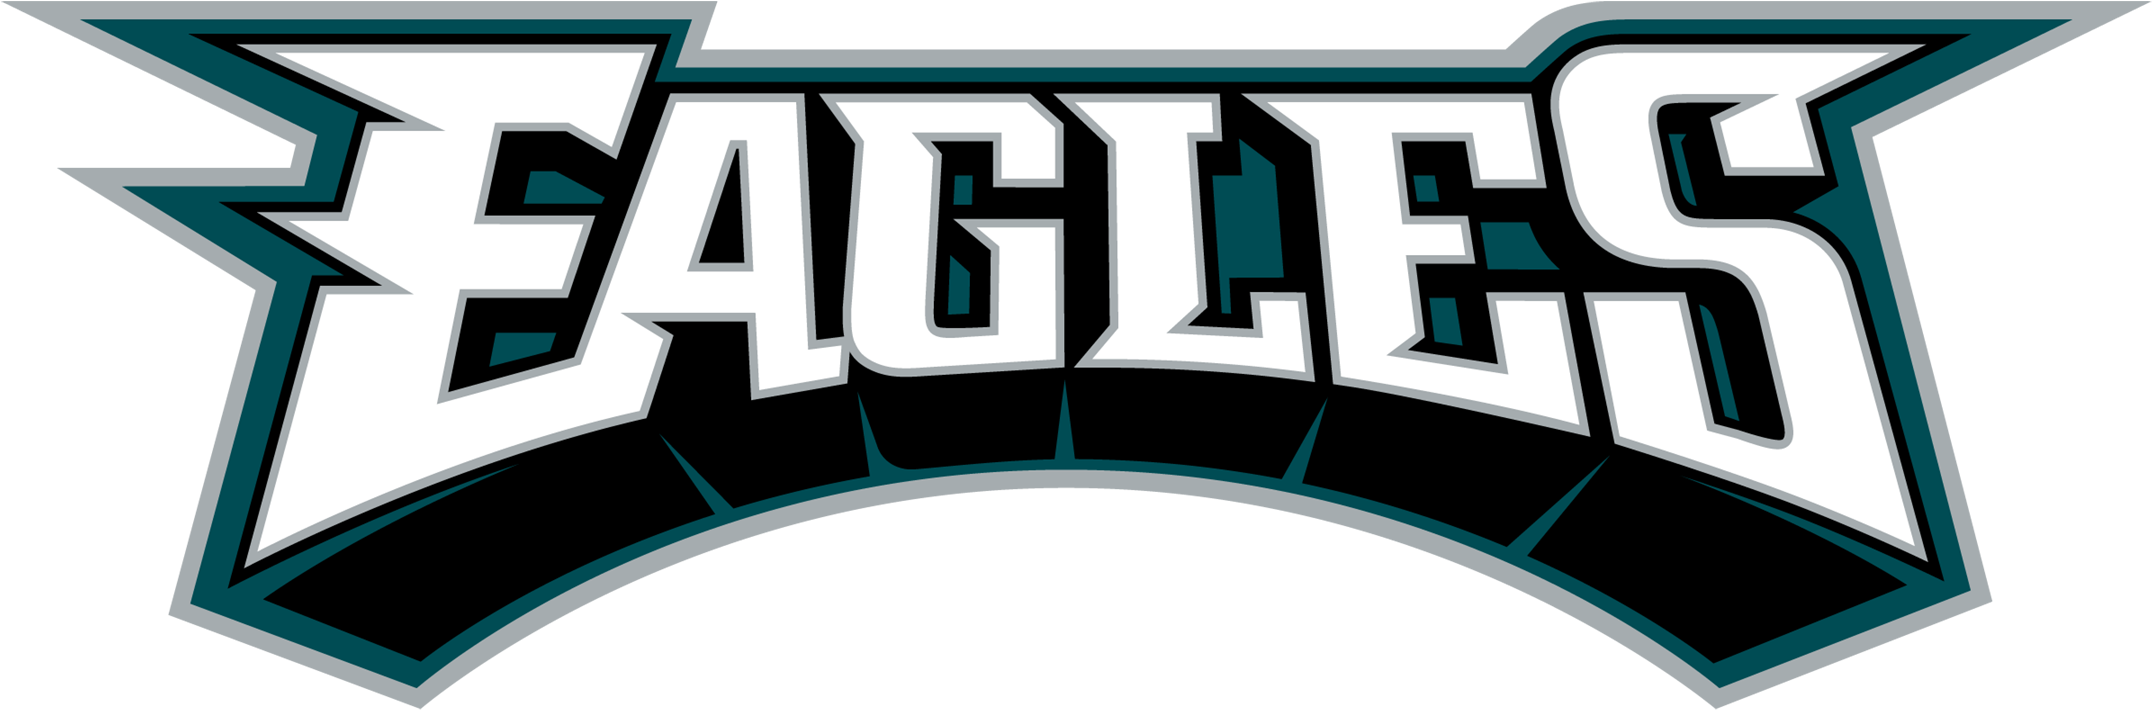 Eagles logo PNG achtergrondafbeelding